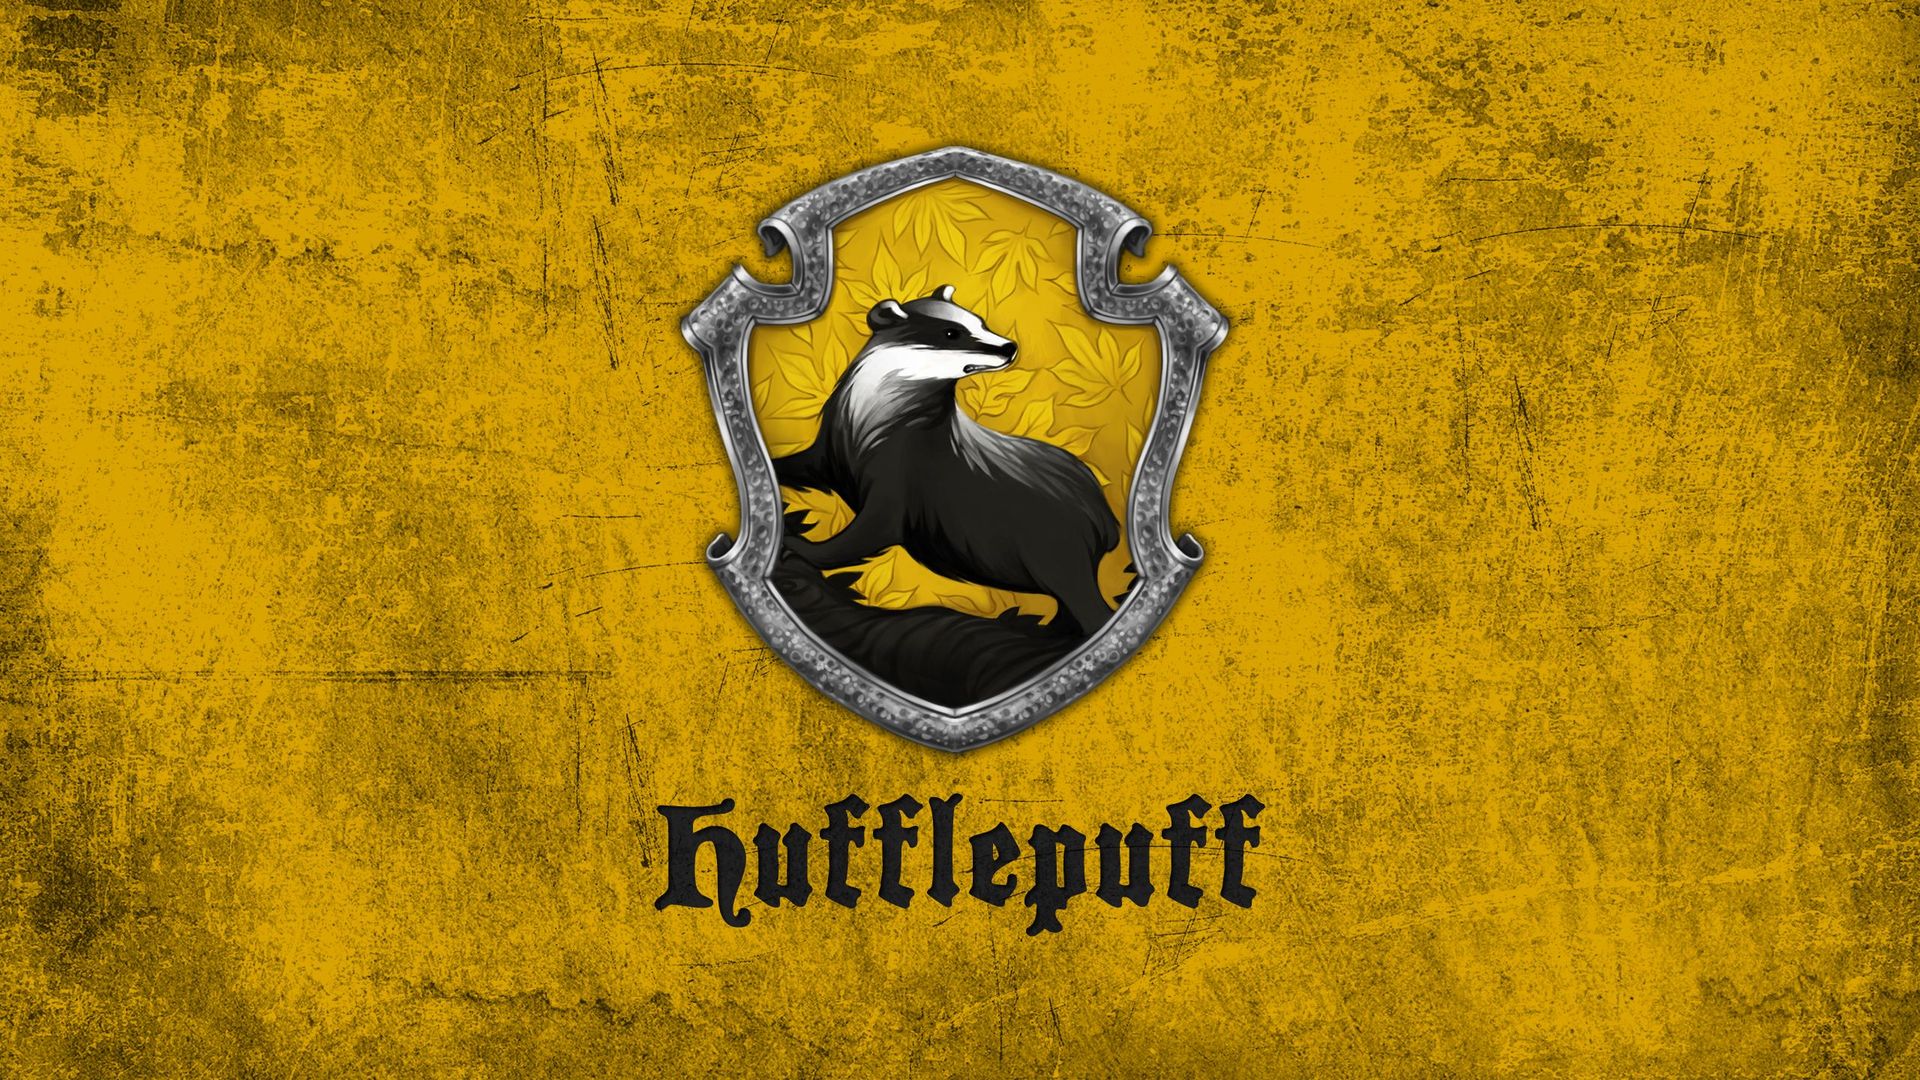 23740-hufflepuff-logo-harry-potter-movie-desktop-wallpaper-1920x1080.jpg